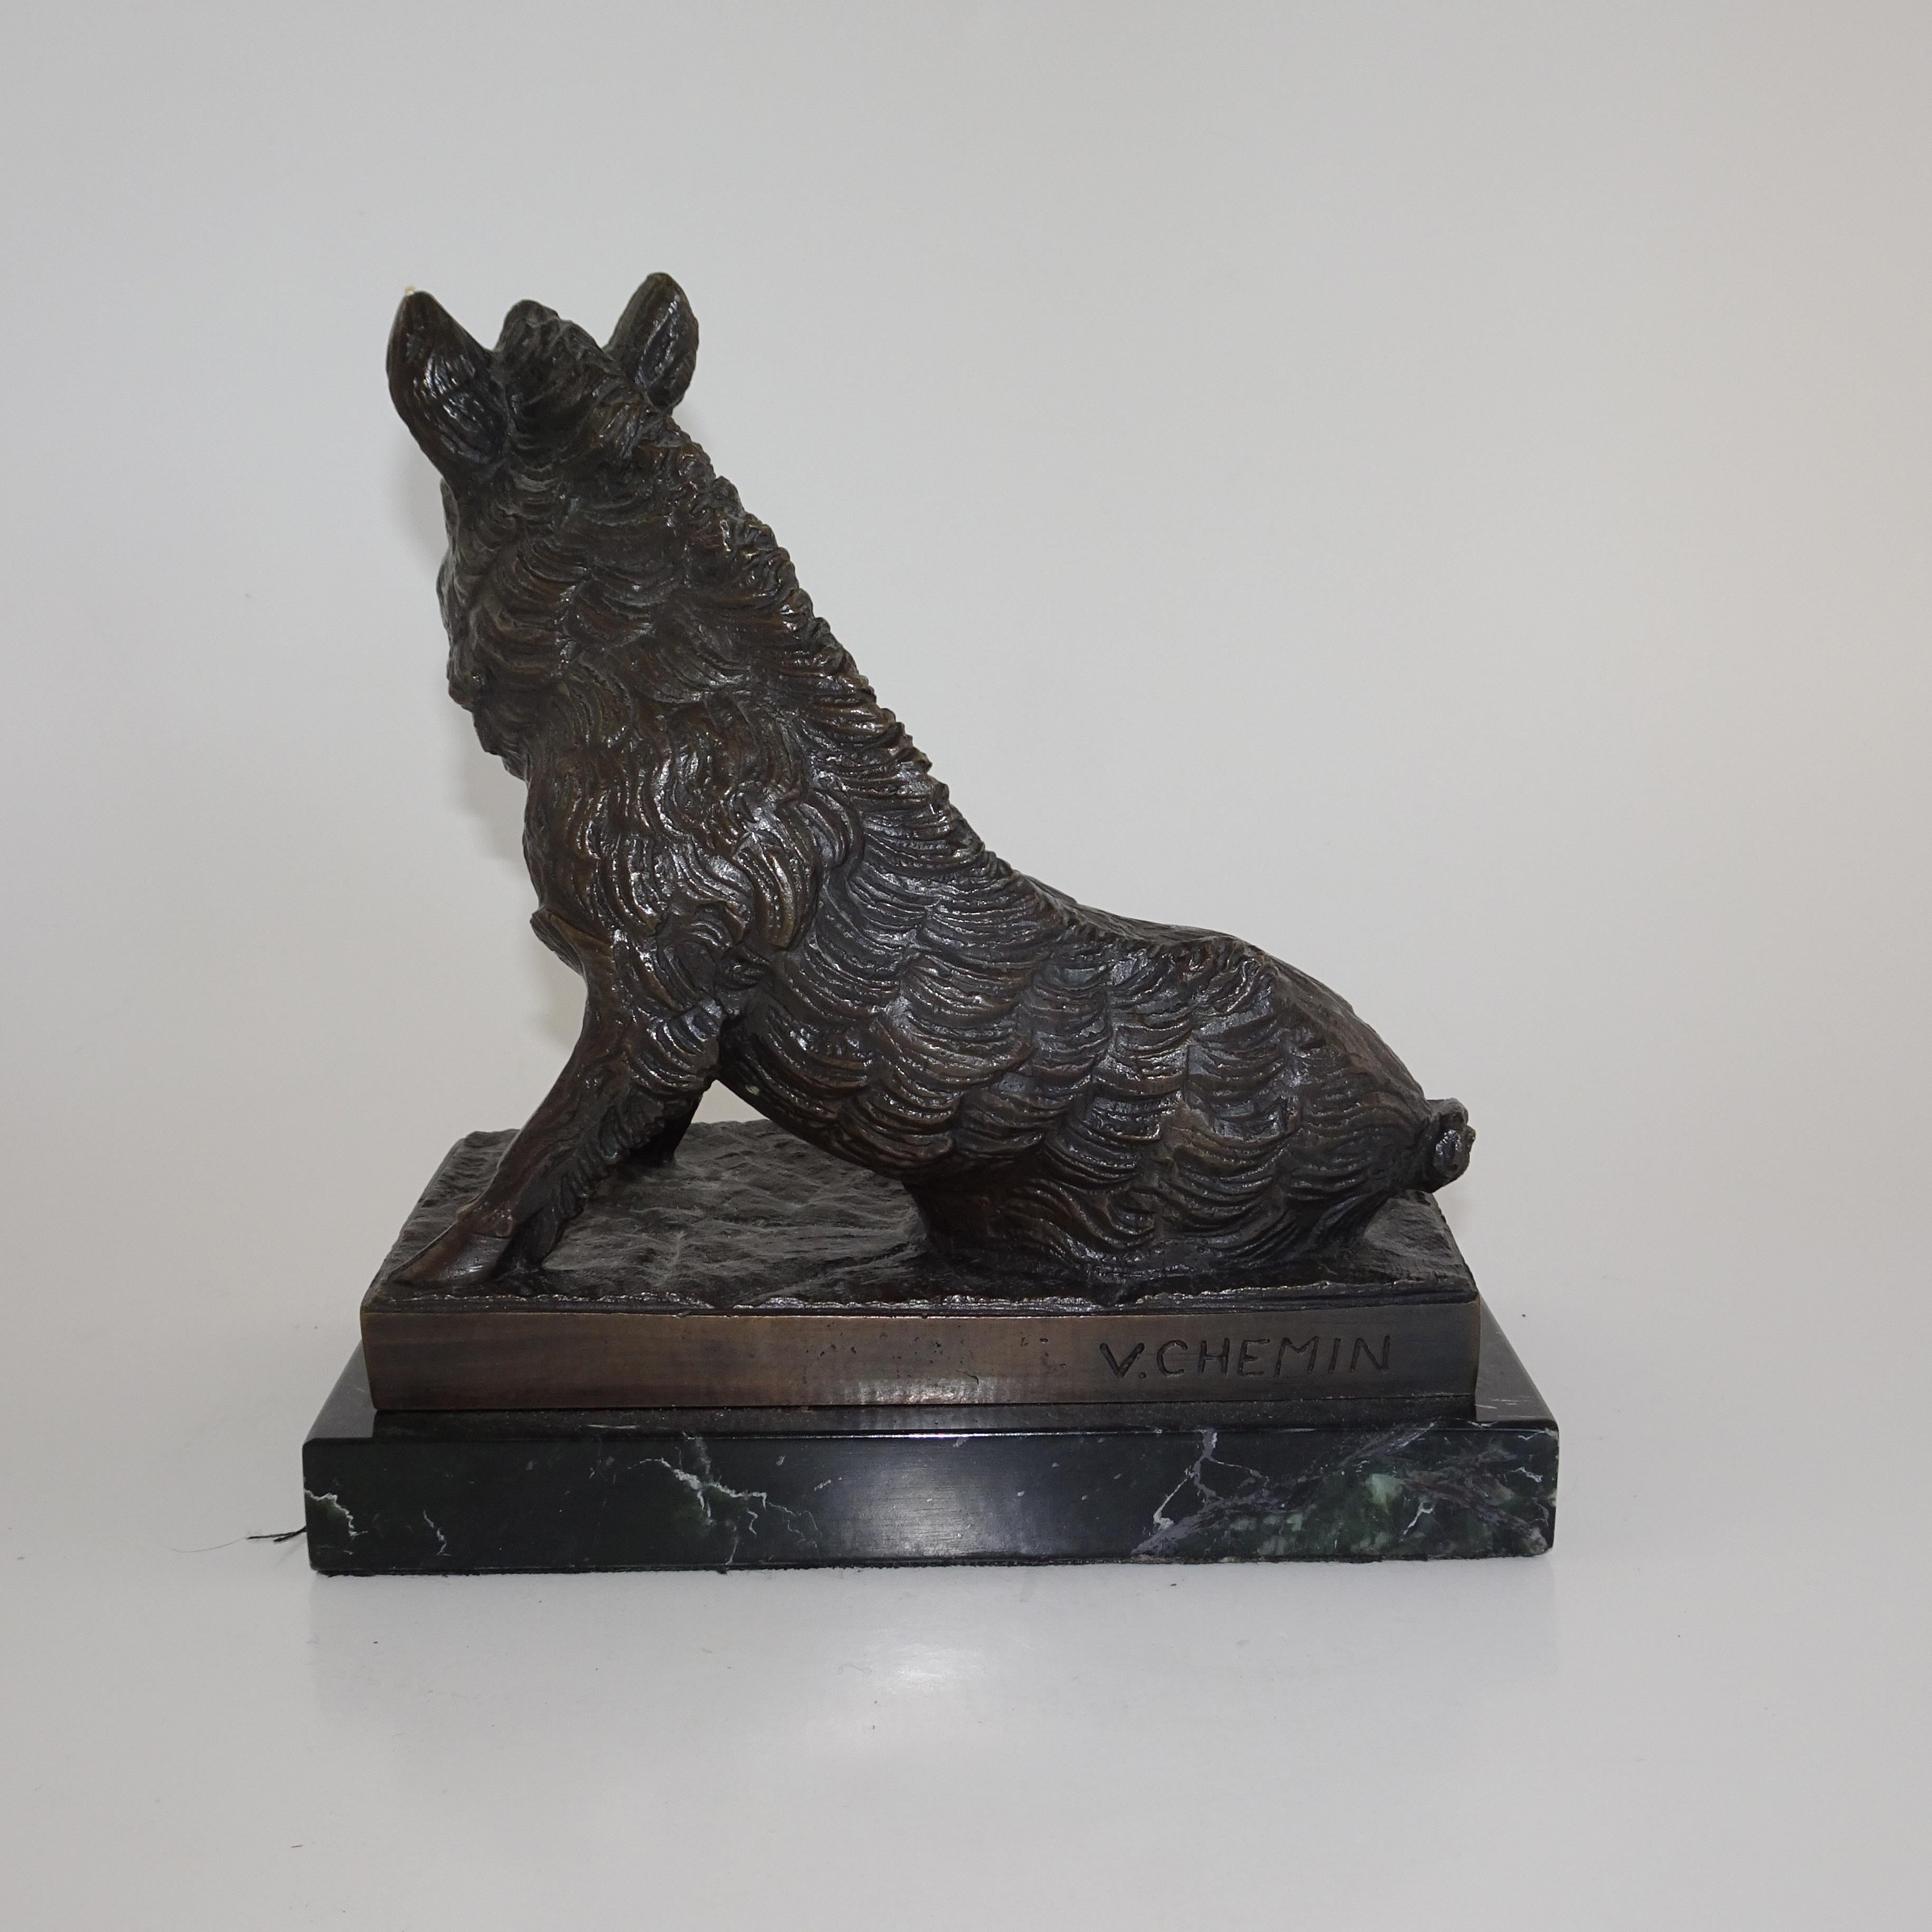 19th Century Black Bronze Boar Figurine Sculpted by Joseph Victor Chemin For Sale 1